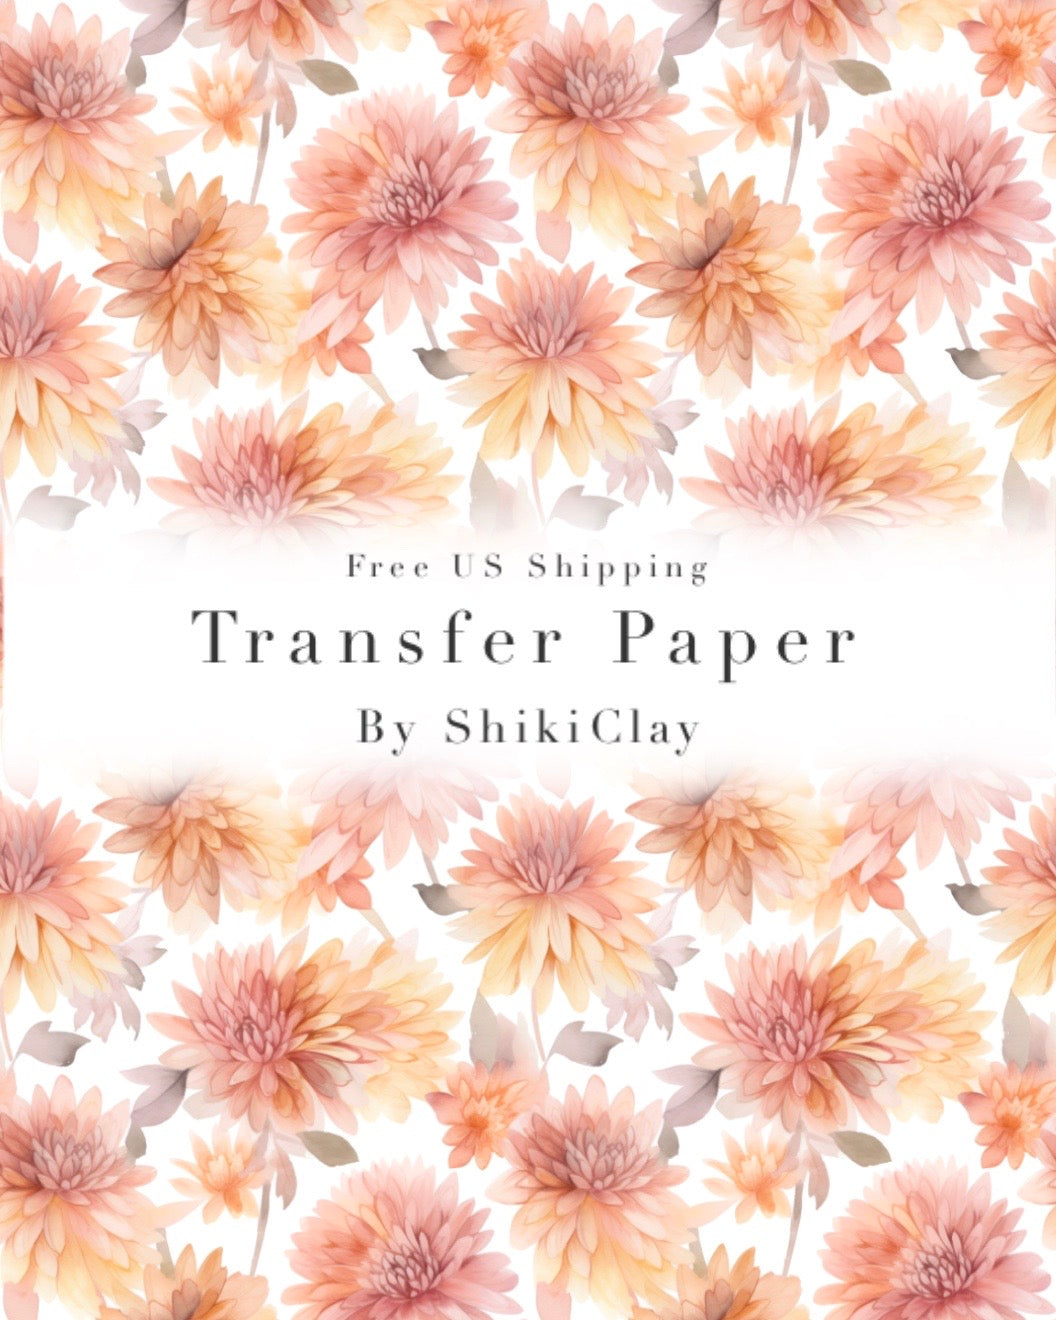 Transfer Paper #25 | polymer clay transfer sheet